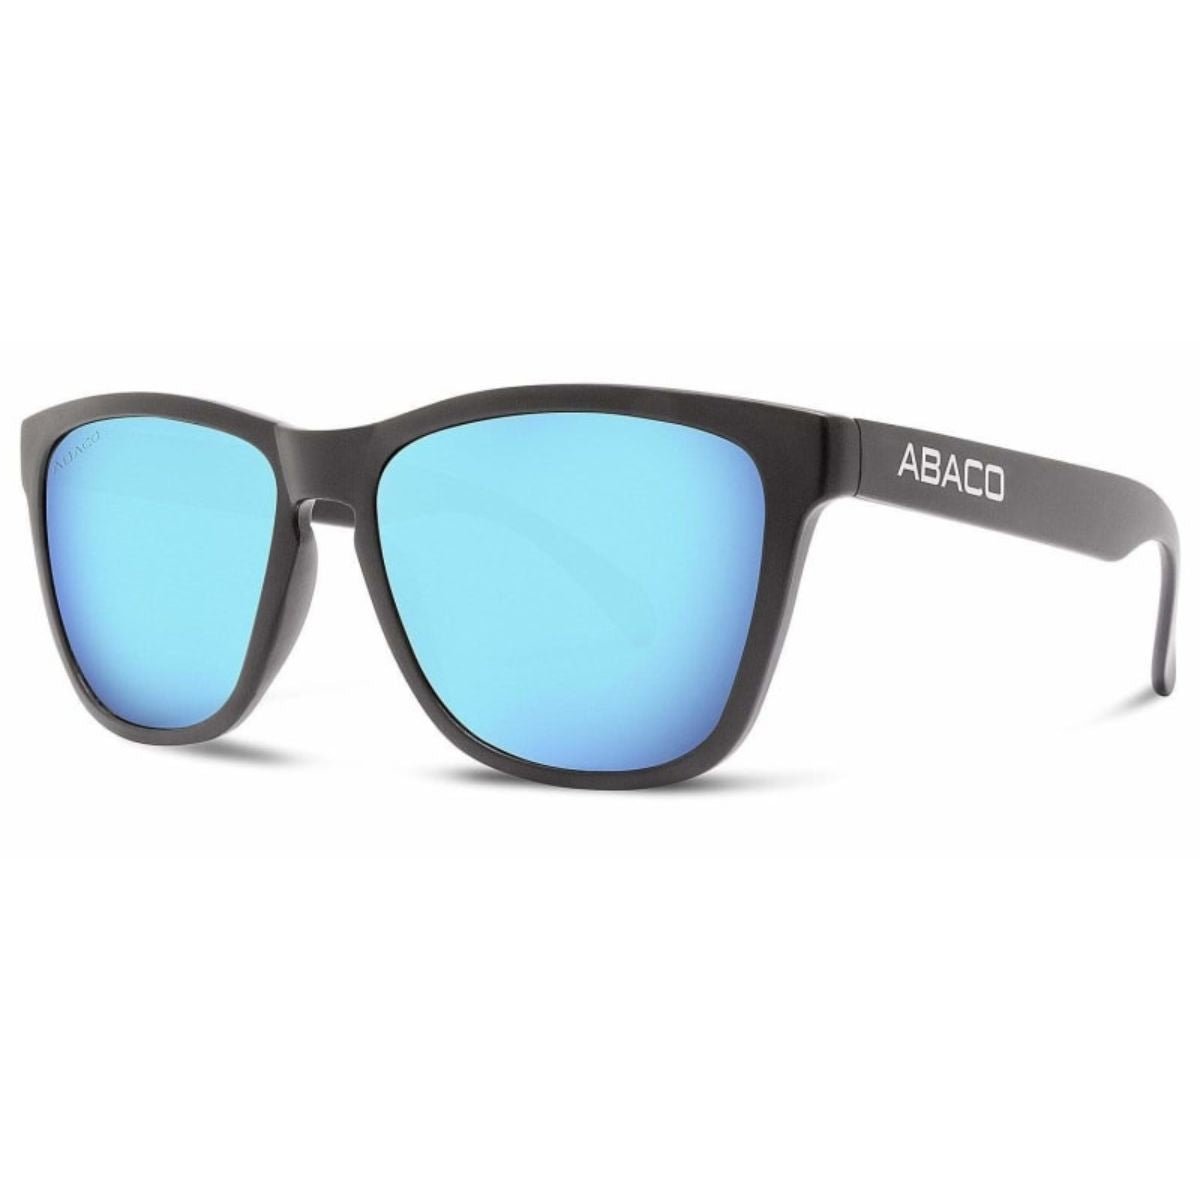 Abaco Dockside Sunglasses in Gloss Black/Caribbean Blue - BoardCo